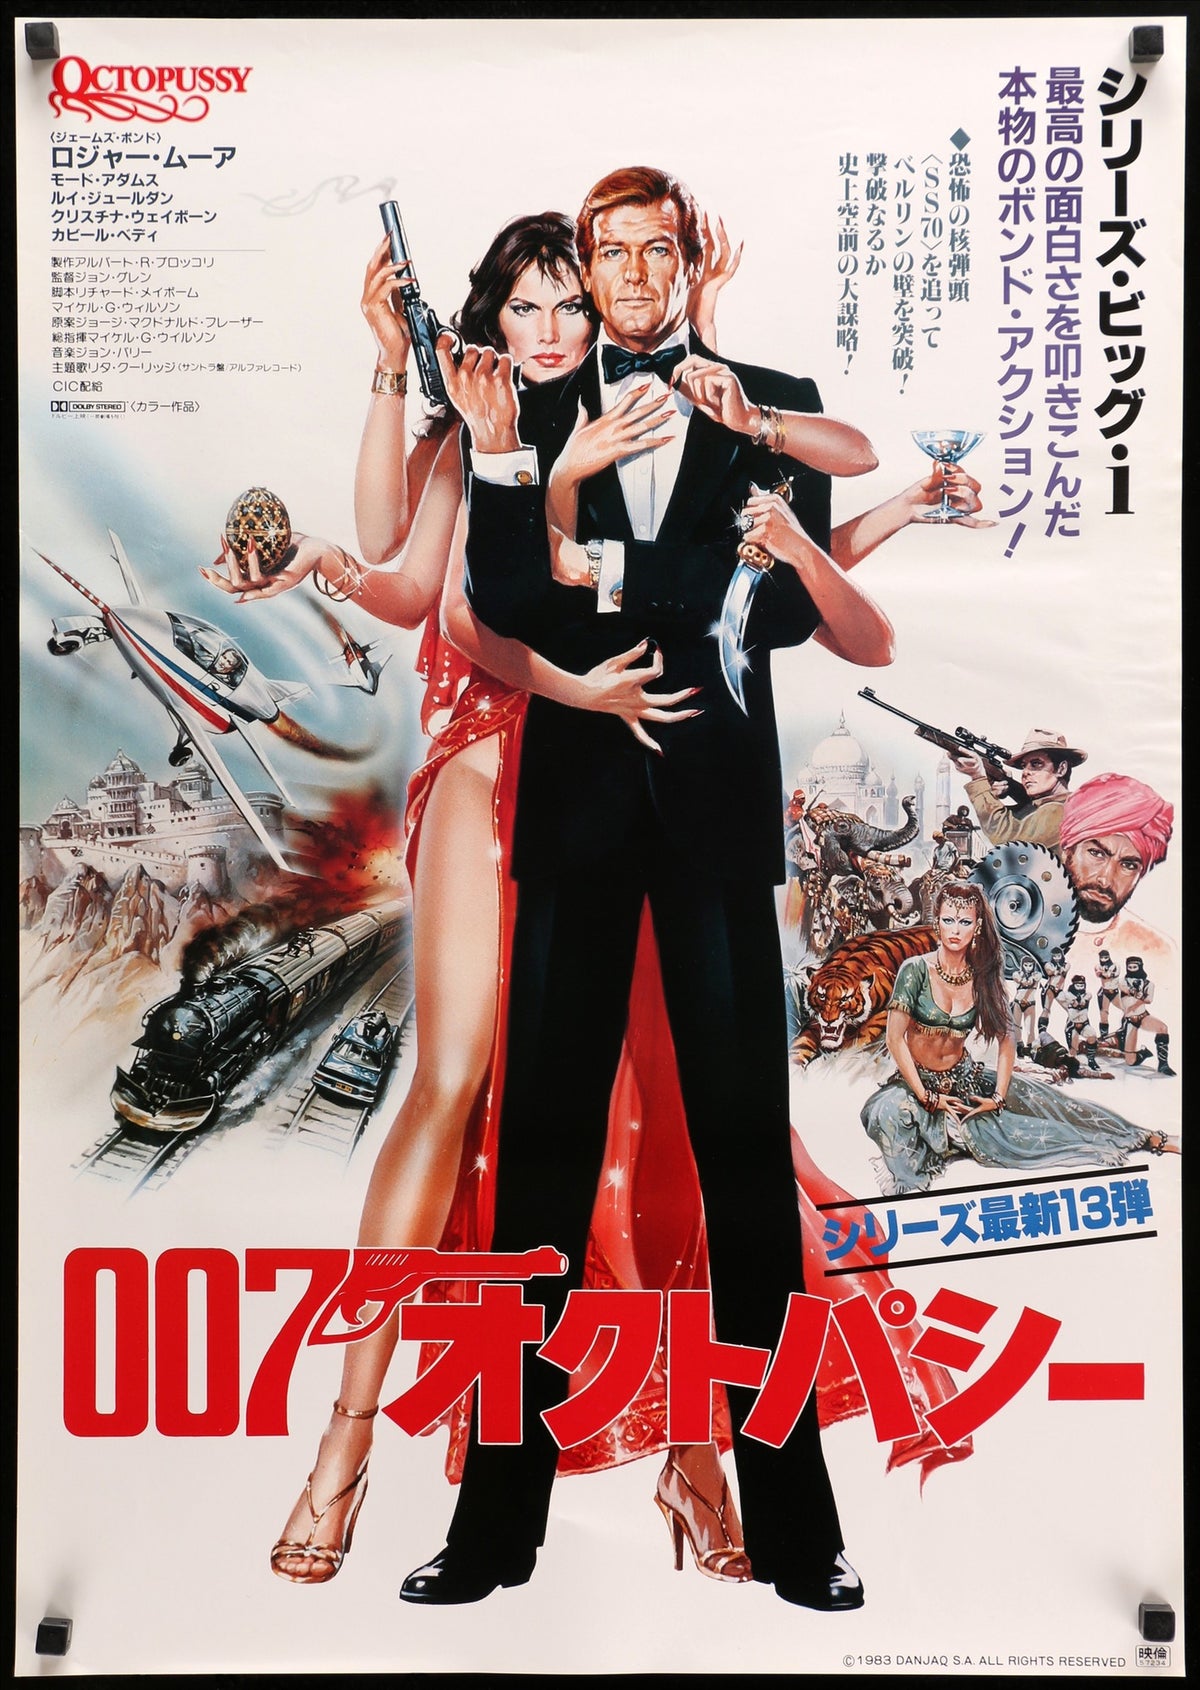 Octopussy (1983) original movie poster for sale at Original Film Art